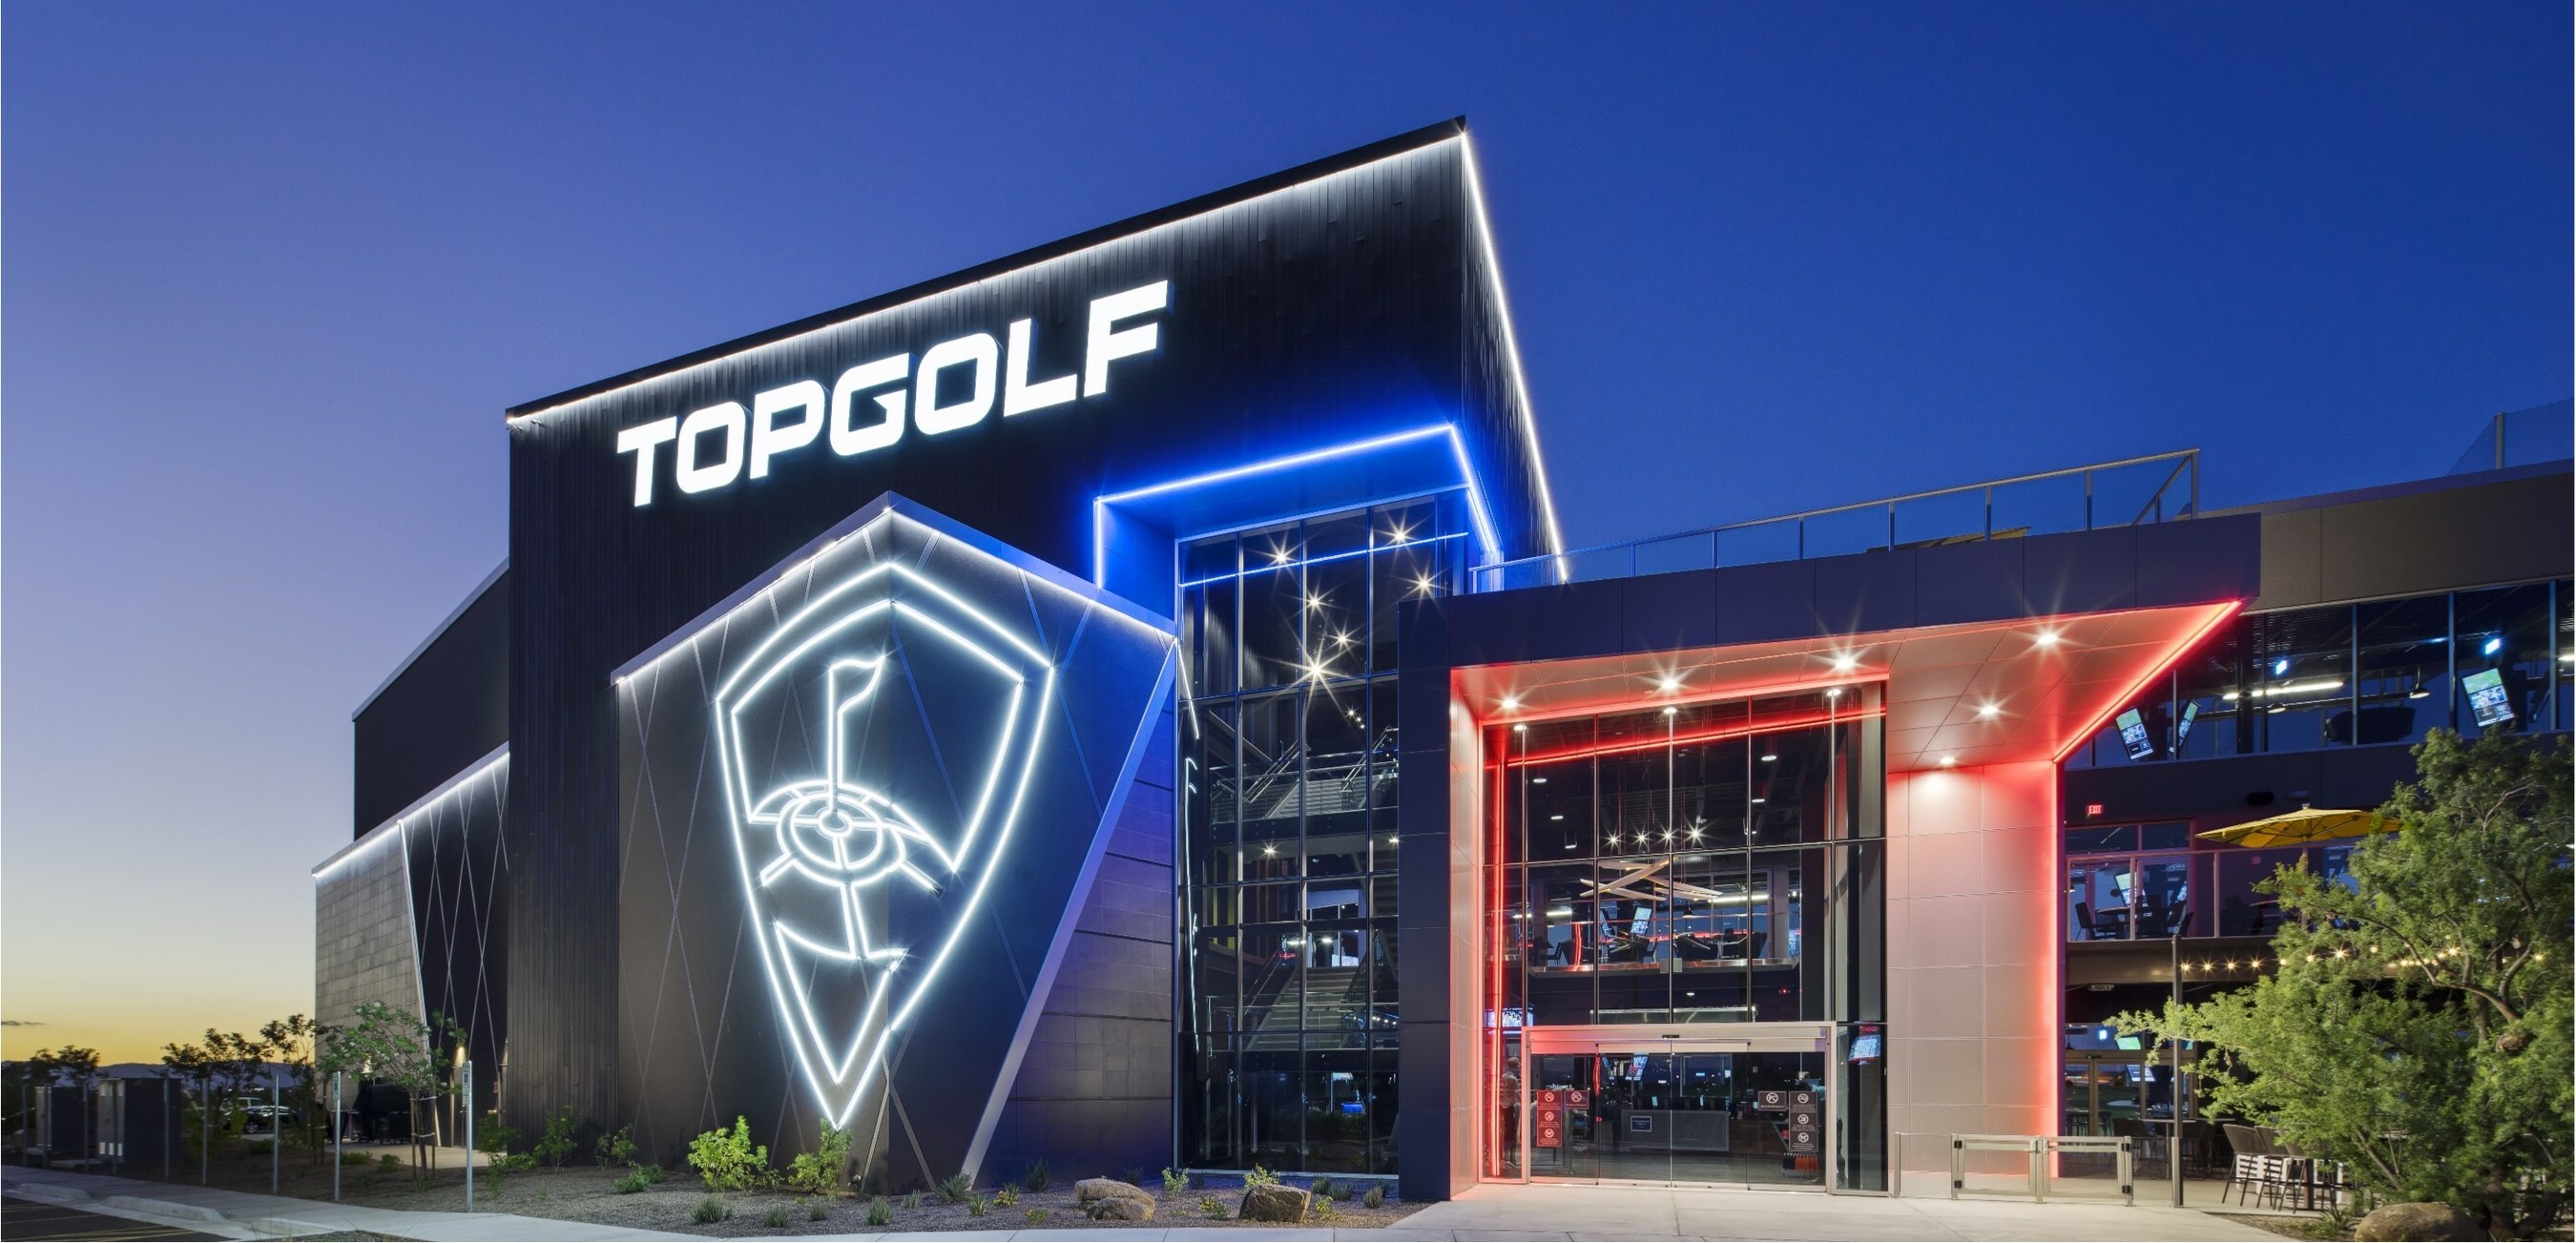 Topgolf – Orlando  ARCO Murray Construction Company